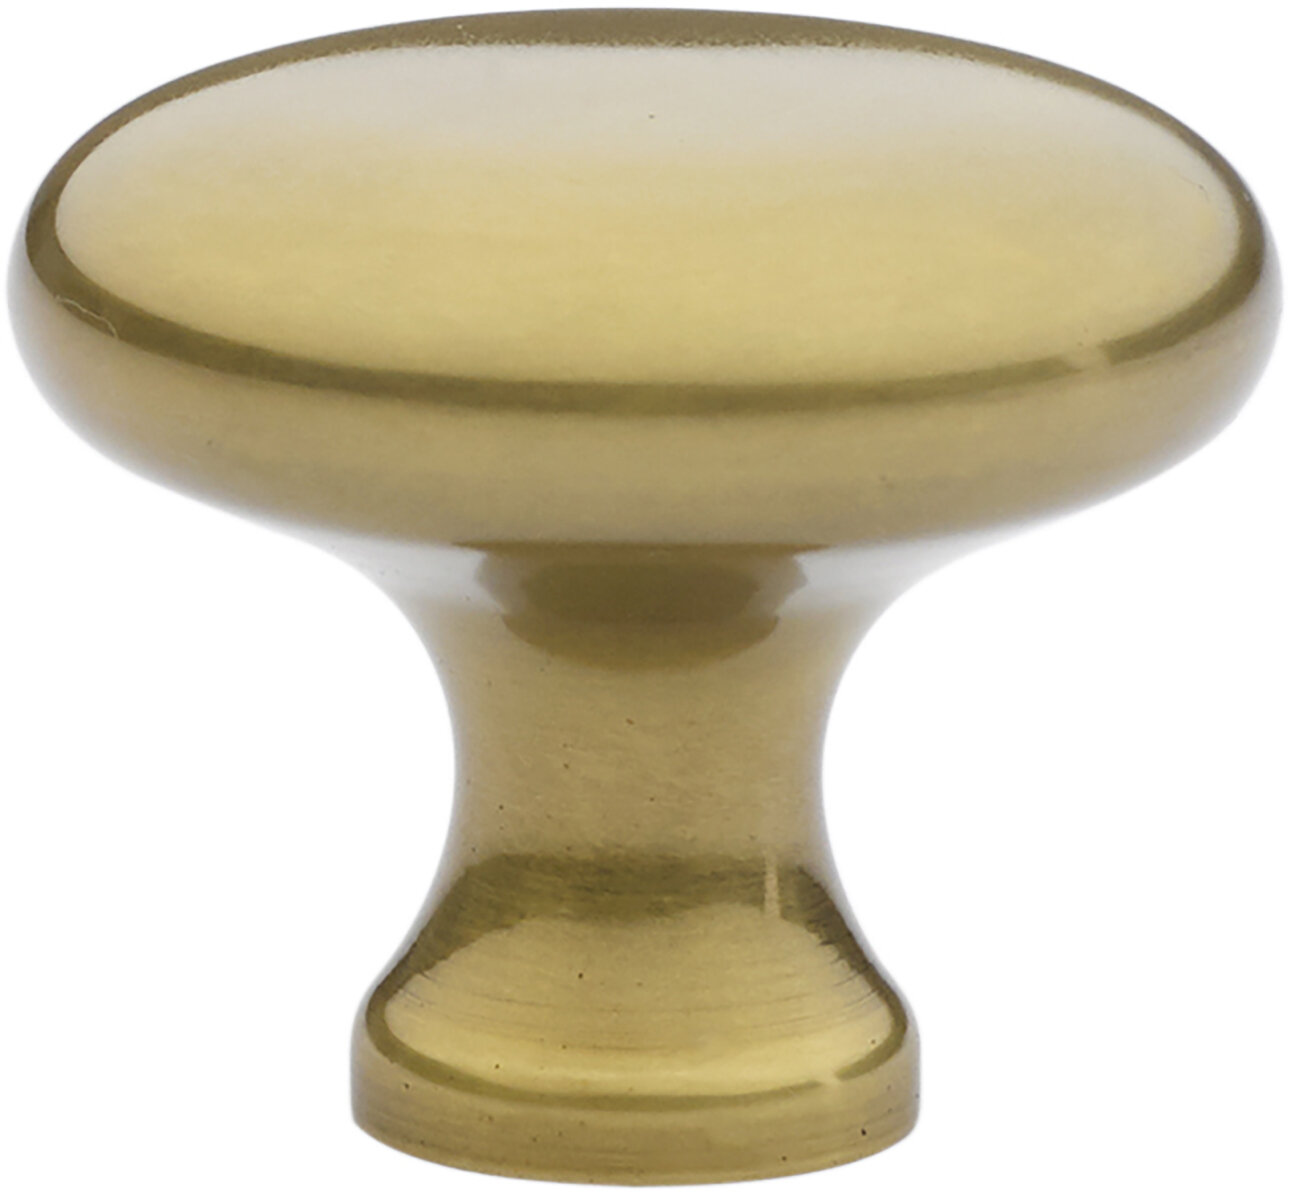 Size French Antique Brass Oval Knob Finish 1.25 H x 1.25 W x 1.25 D 